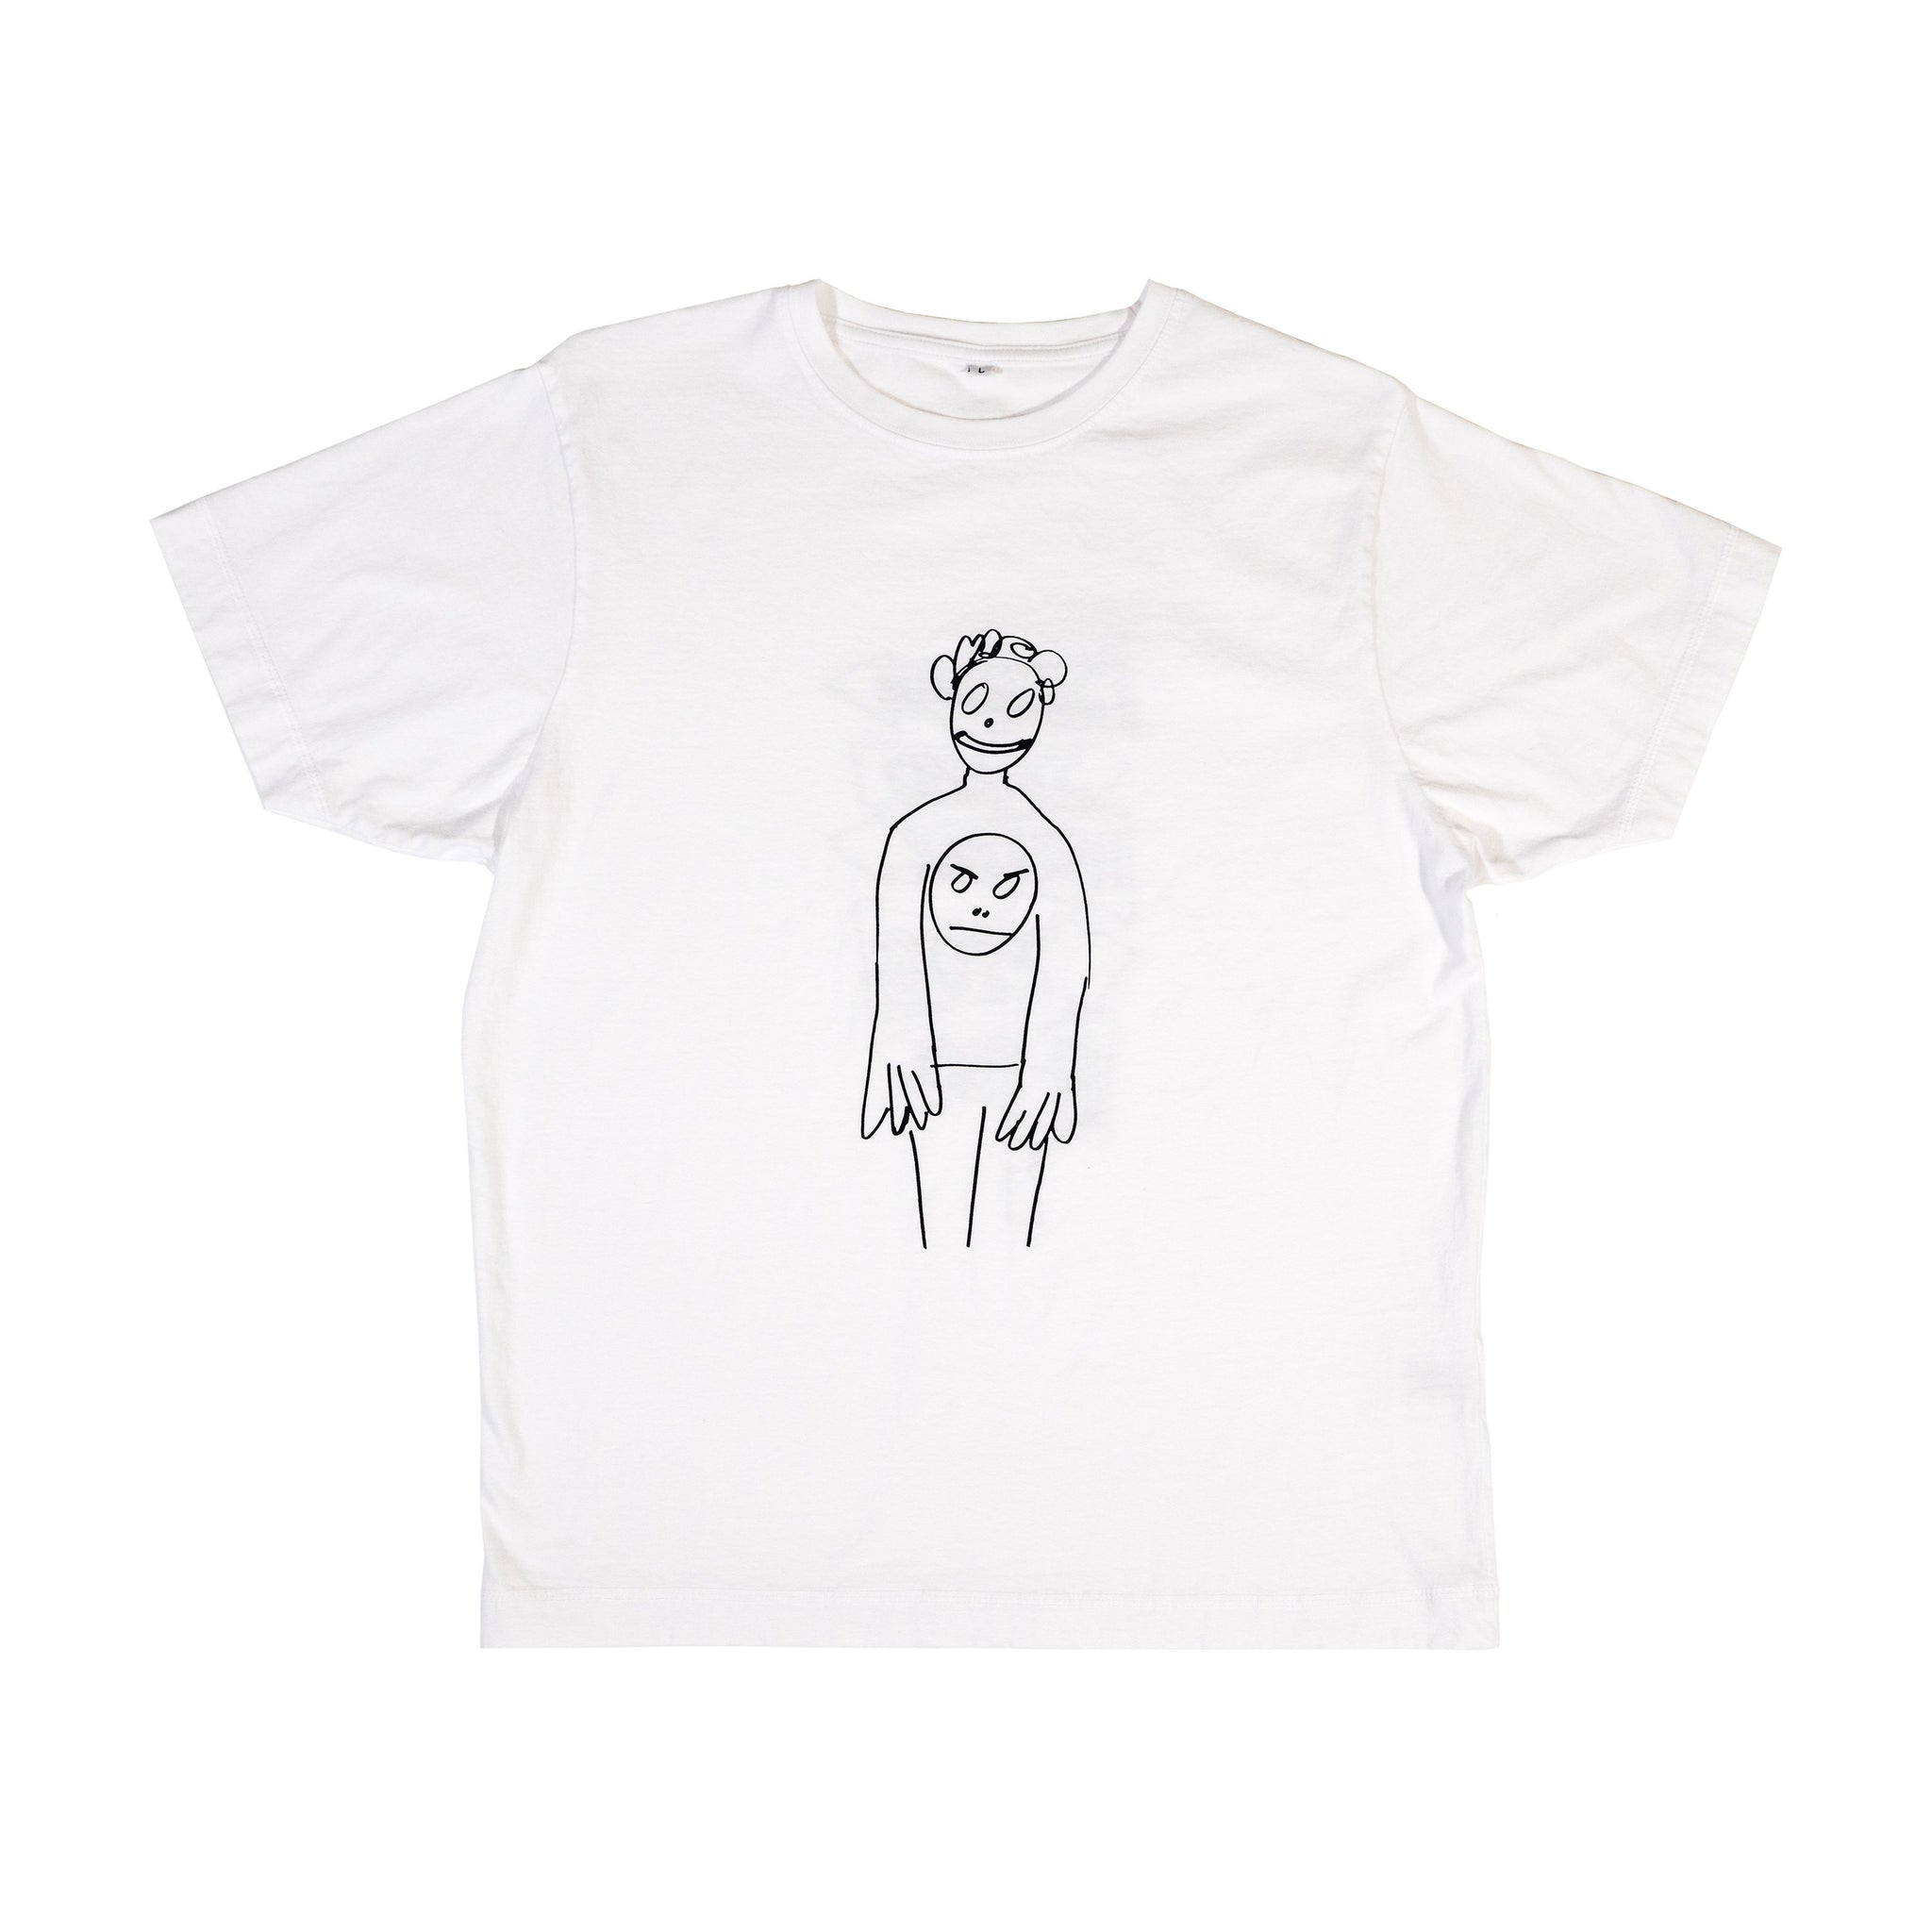 Richard Prince: High Times T-shirt | Gagosian Shop